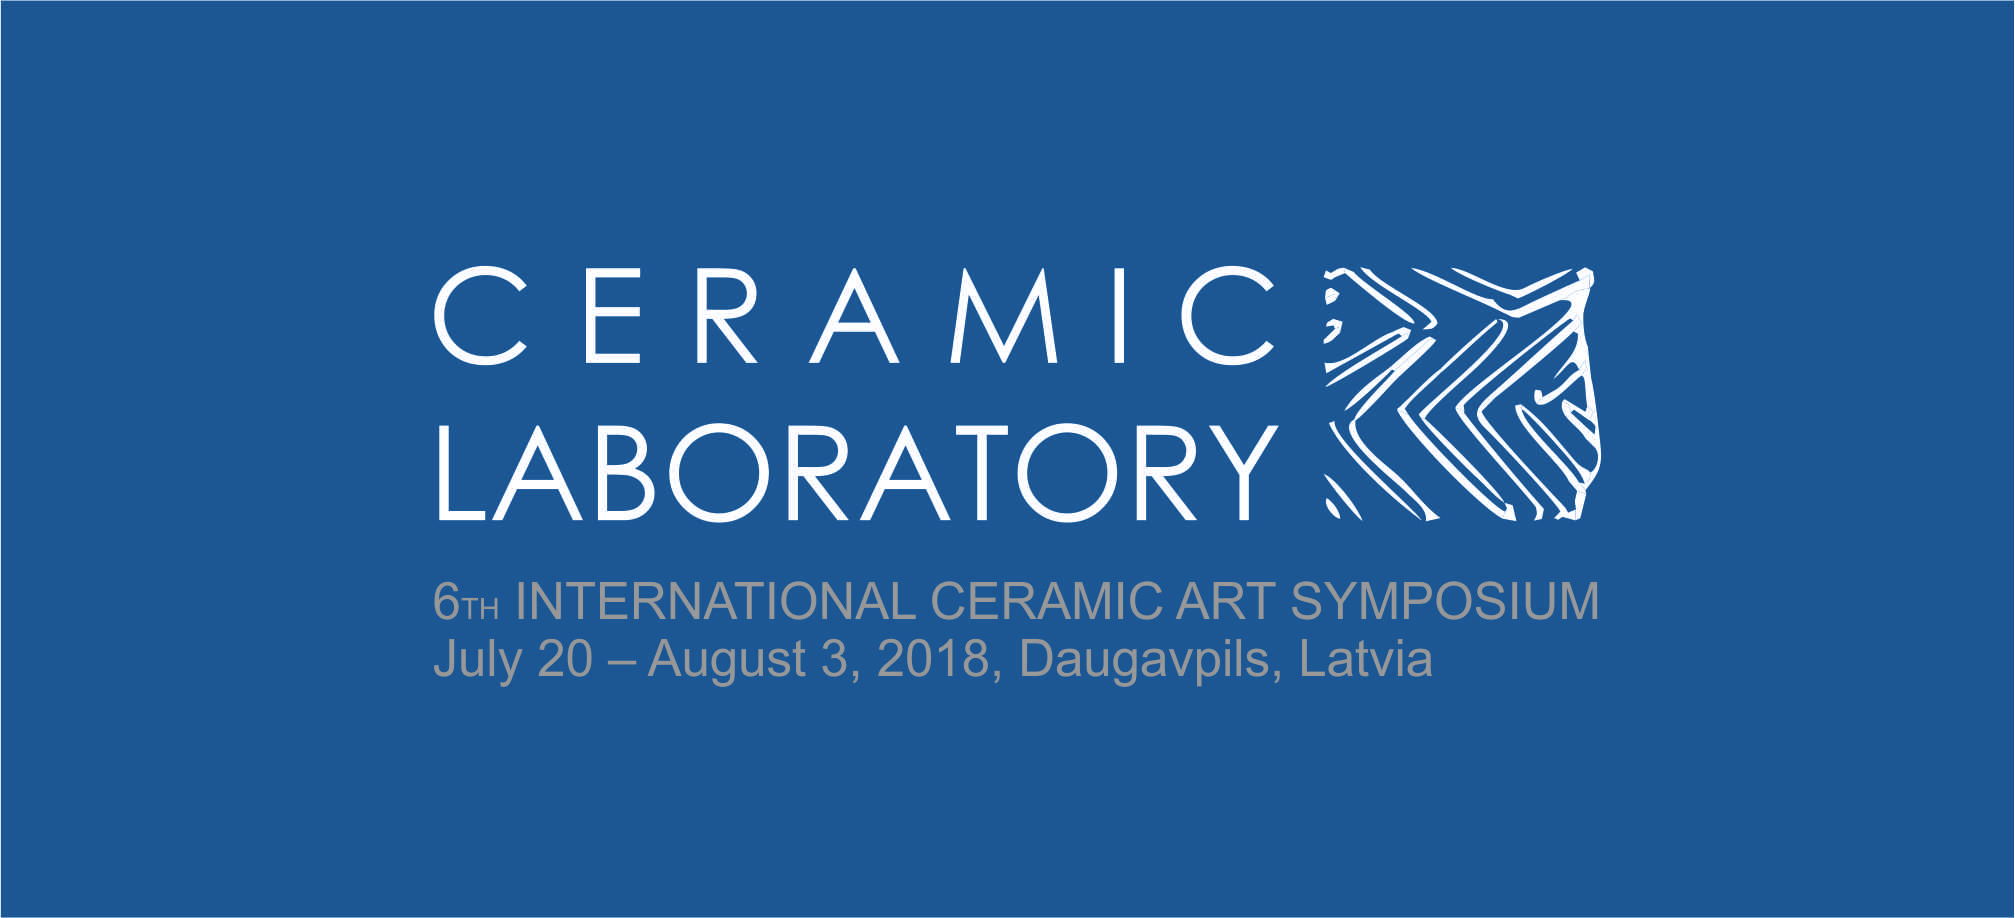 Firing Festival of the International Ceramic Art Symposium “Ceramic Laboratory”